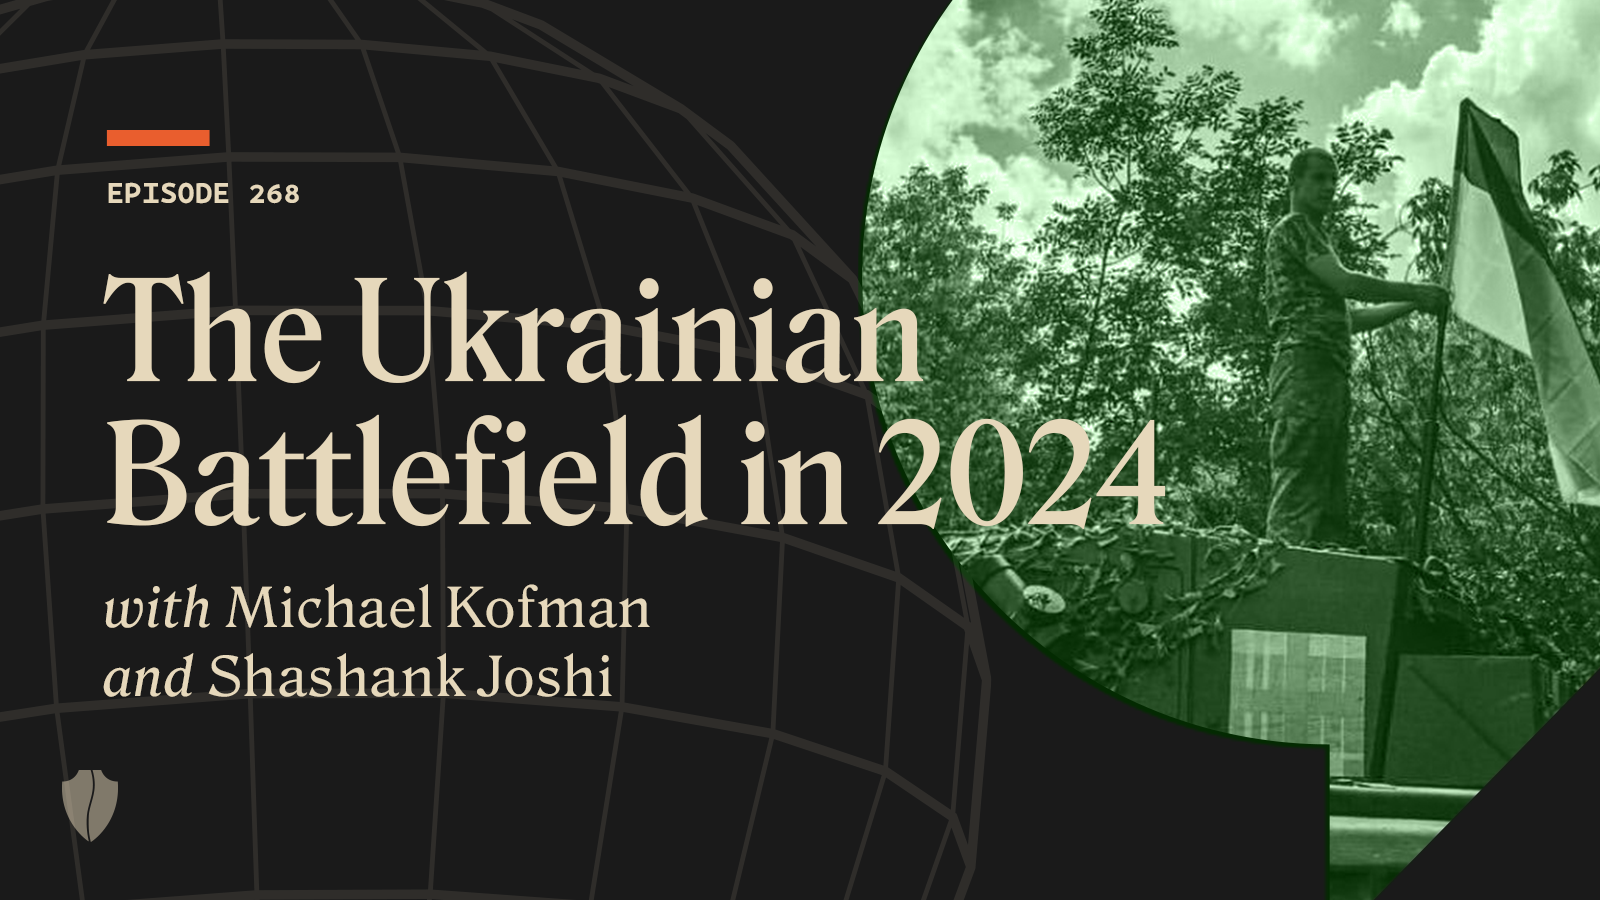 Michael Kofman And Shashank Joshi Analyze The Ukrainian